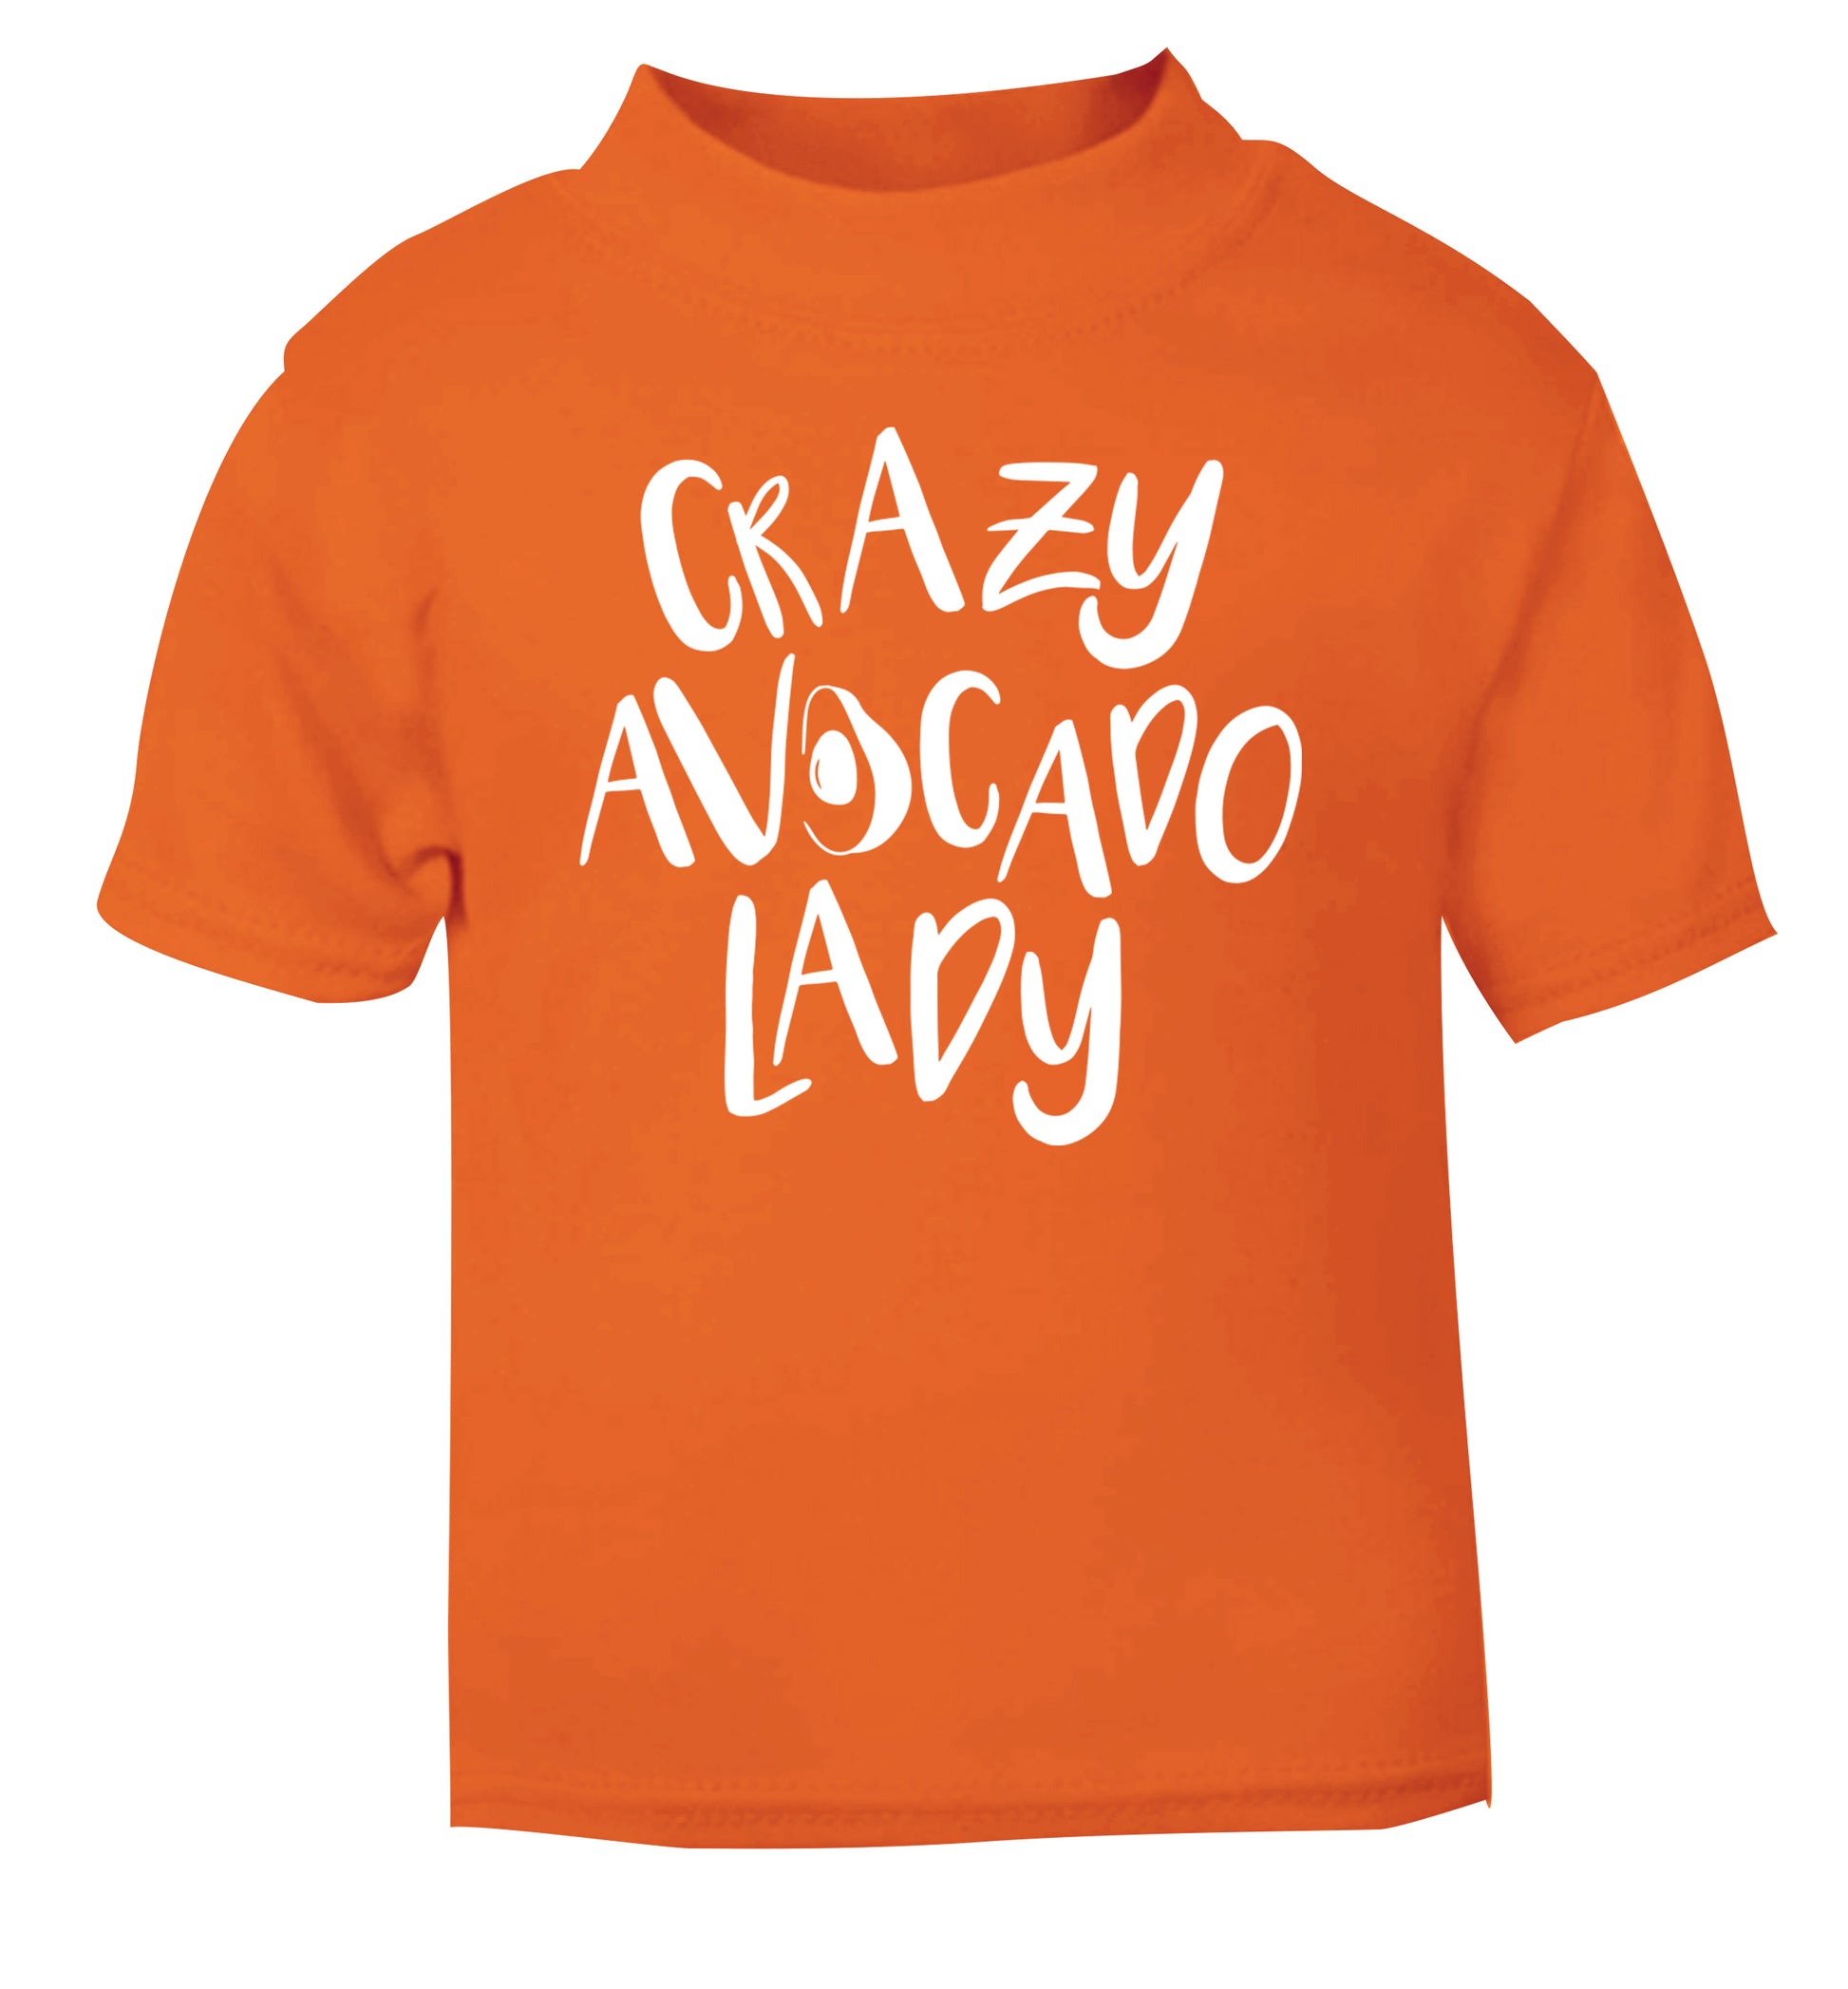 Crazy avocado lady orange Baby Toddler Tshirt 2 Years